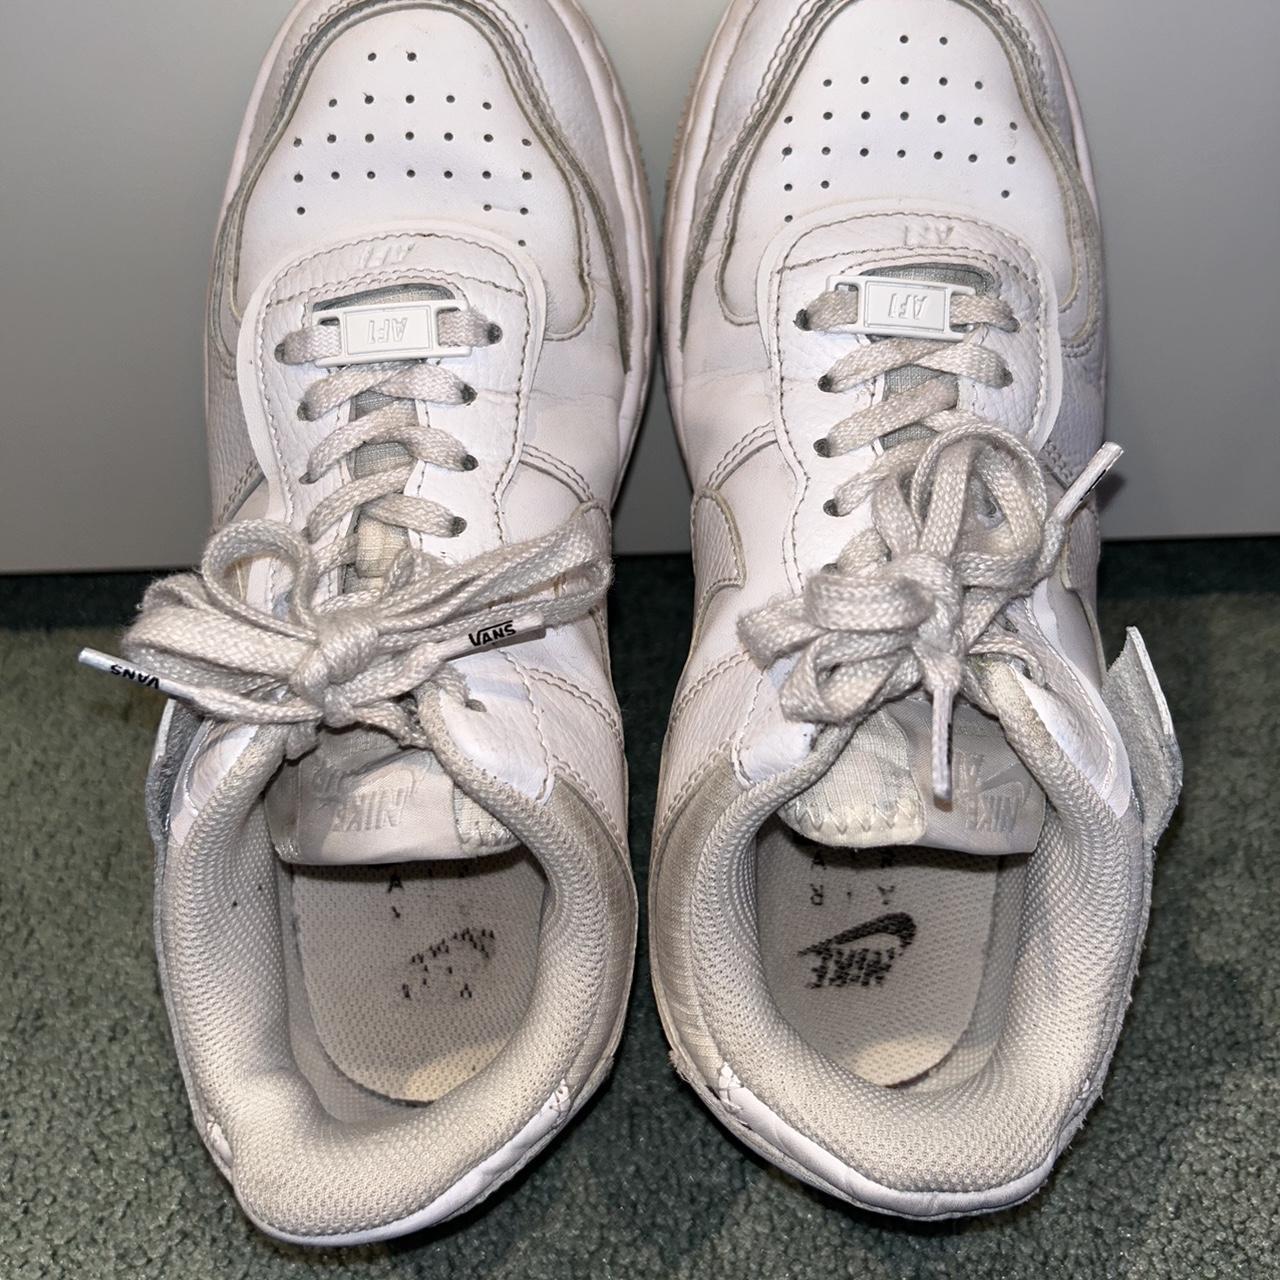 Nike Air Force One Shadows W7/M5.5 Original laces... - Depop